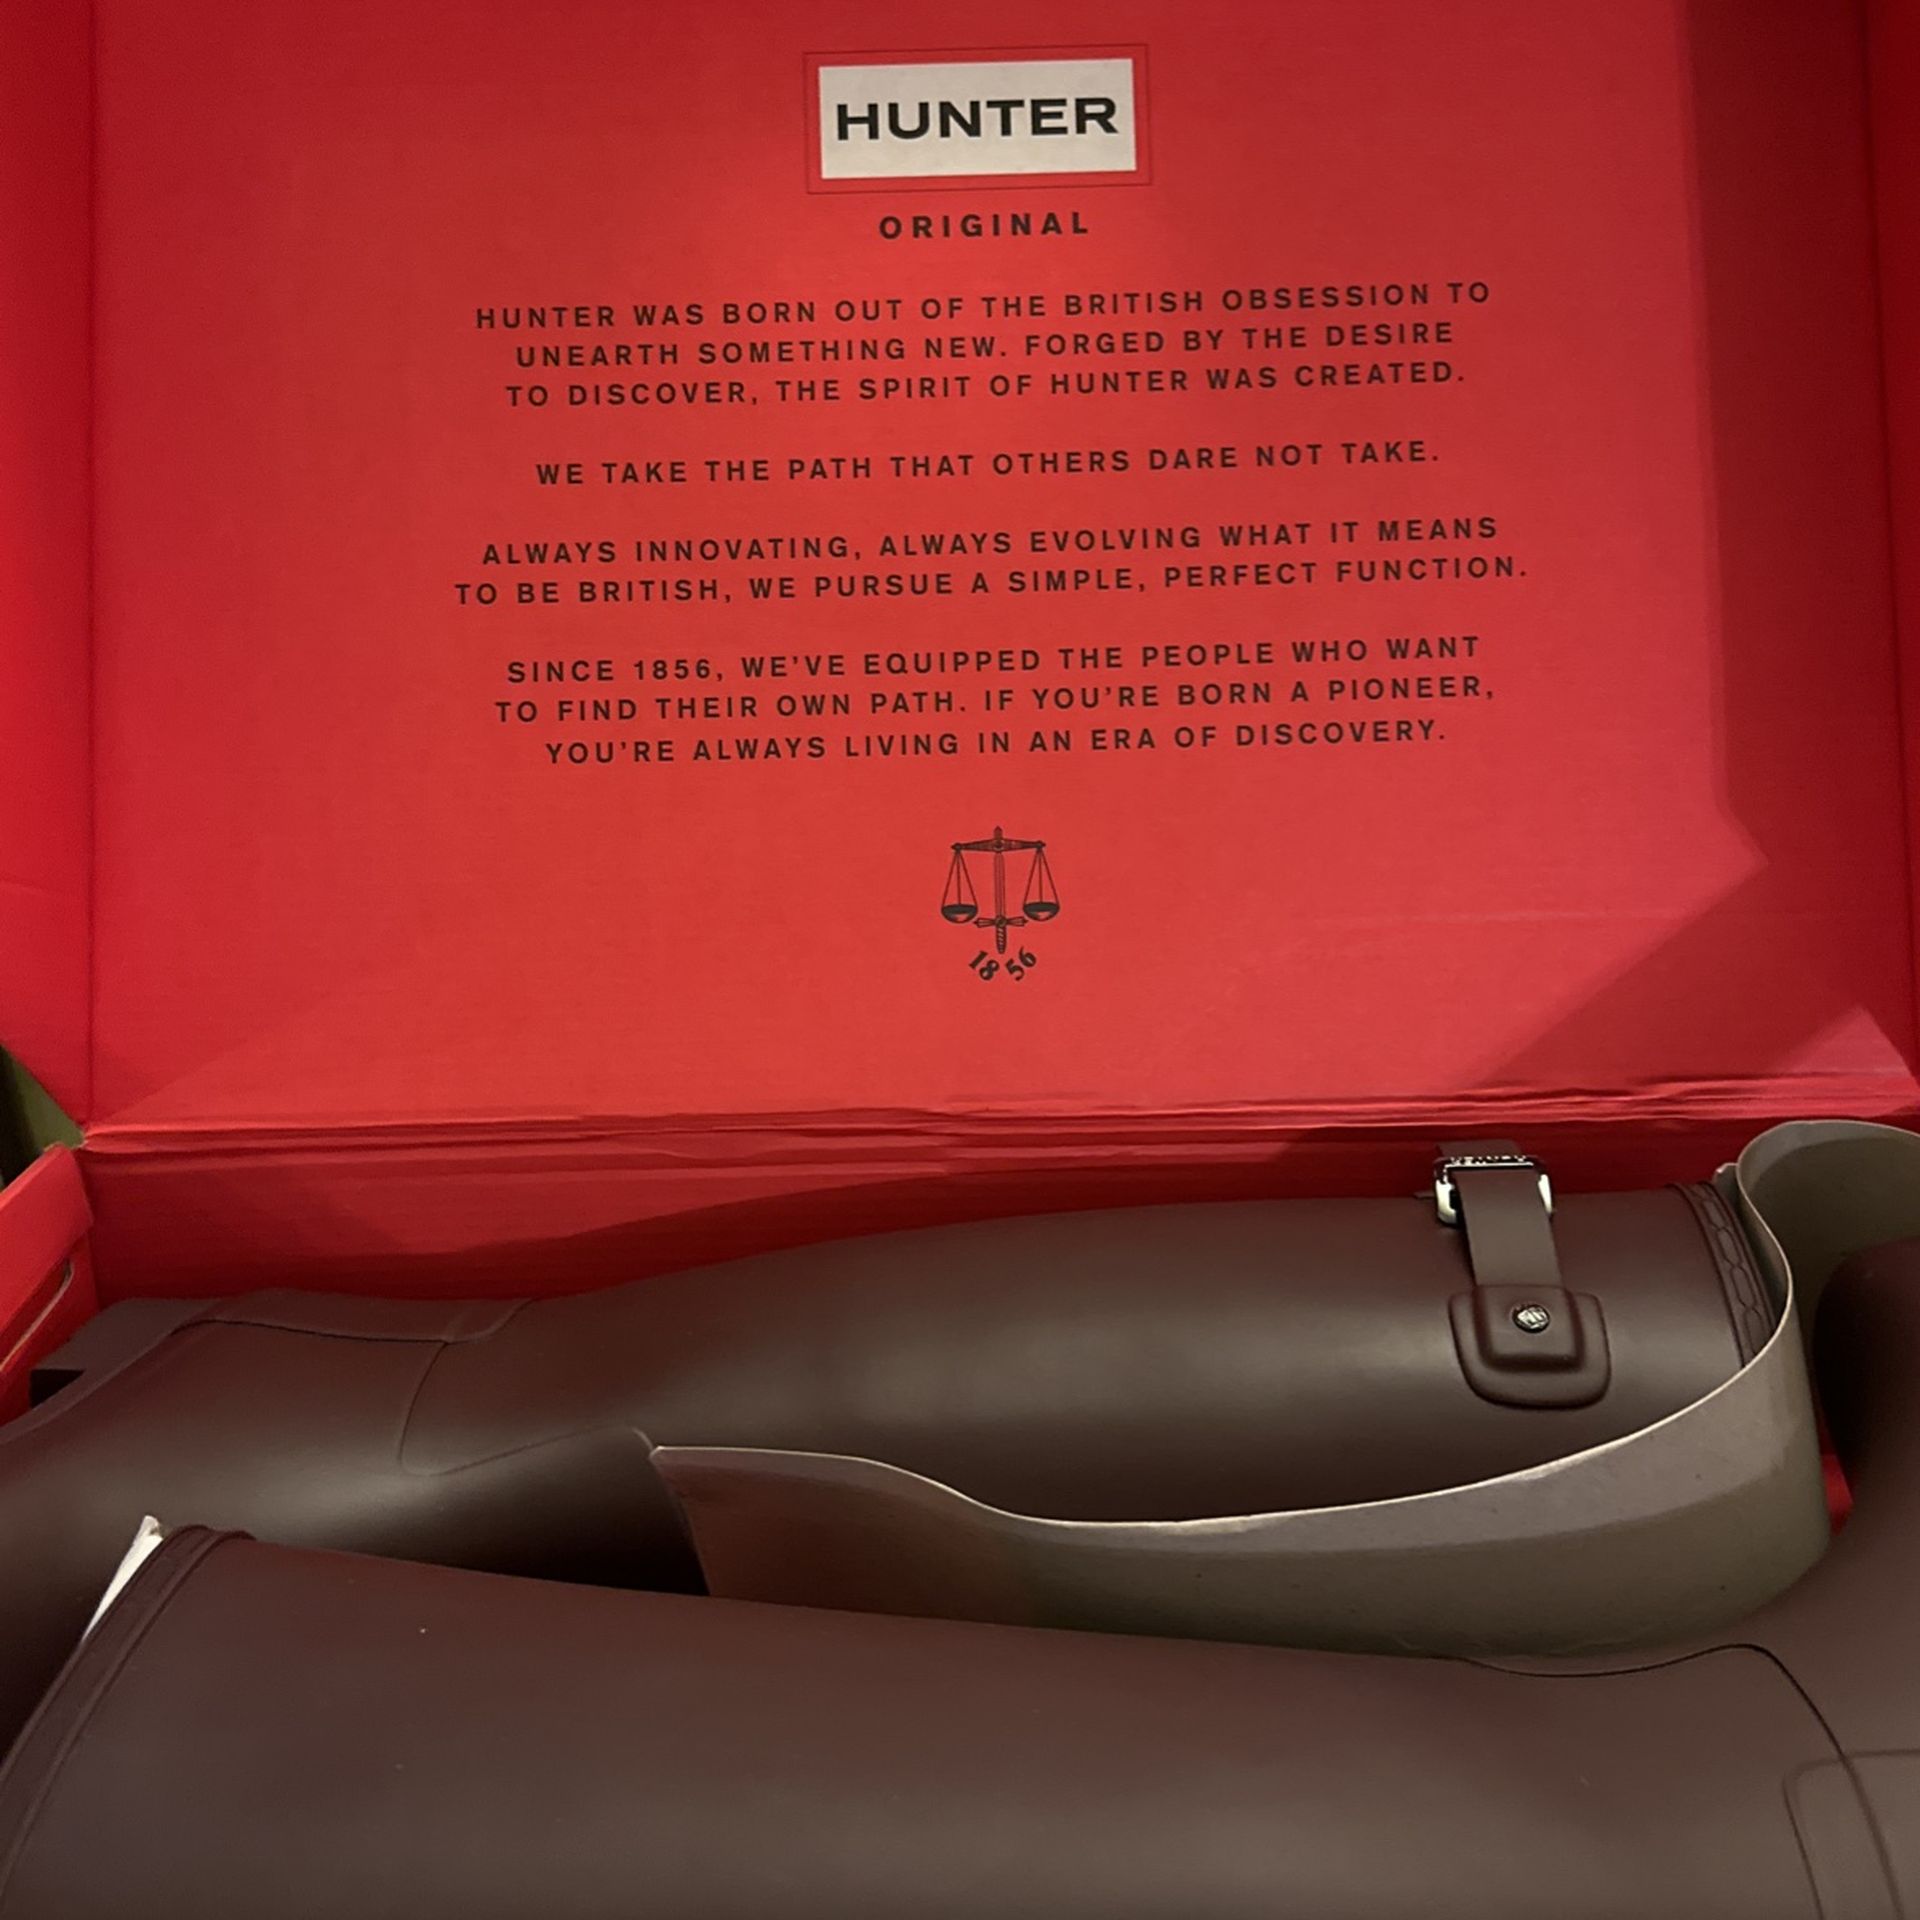 Hunter Original Refined Rain Boots